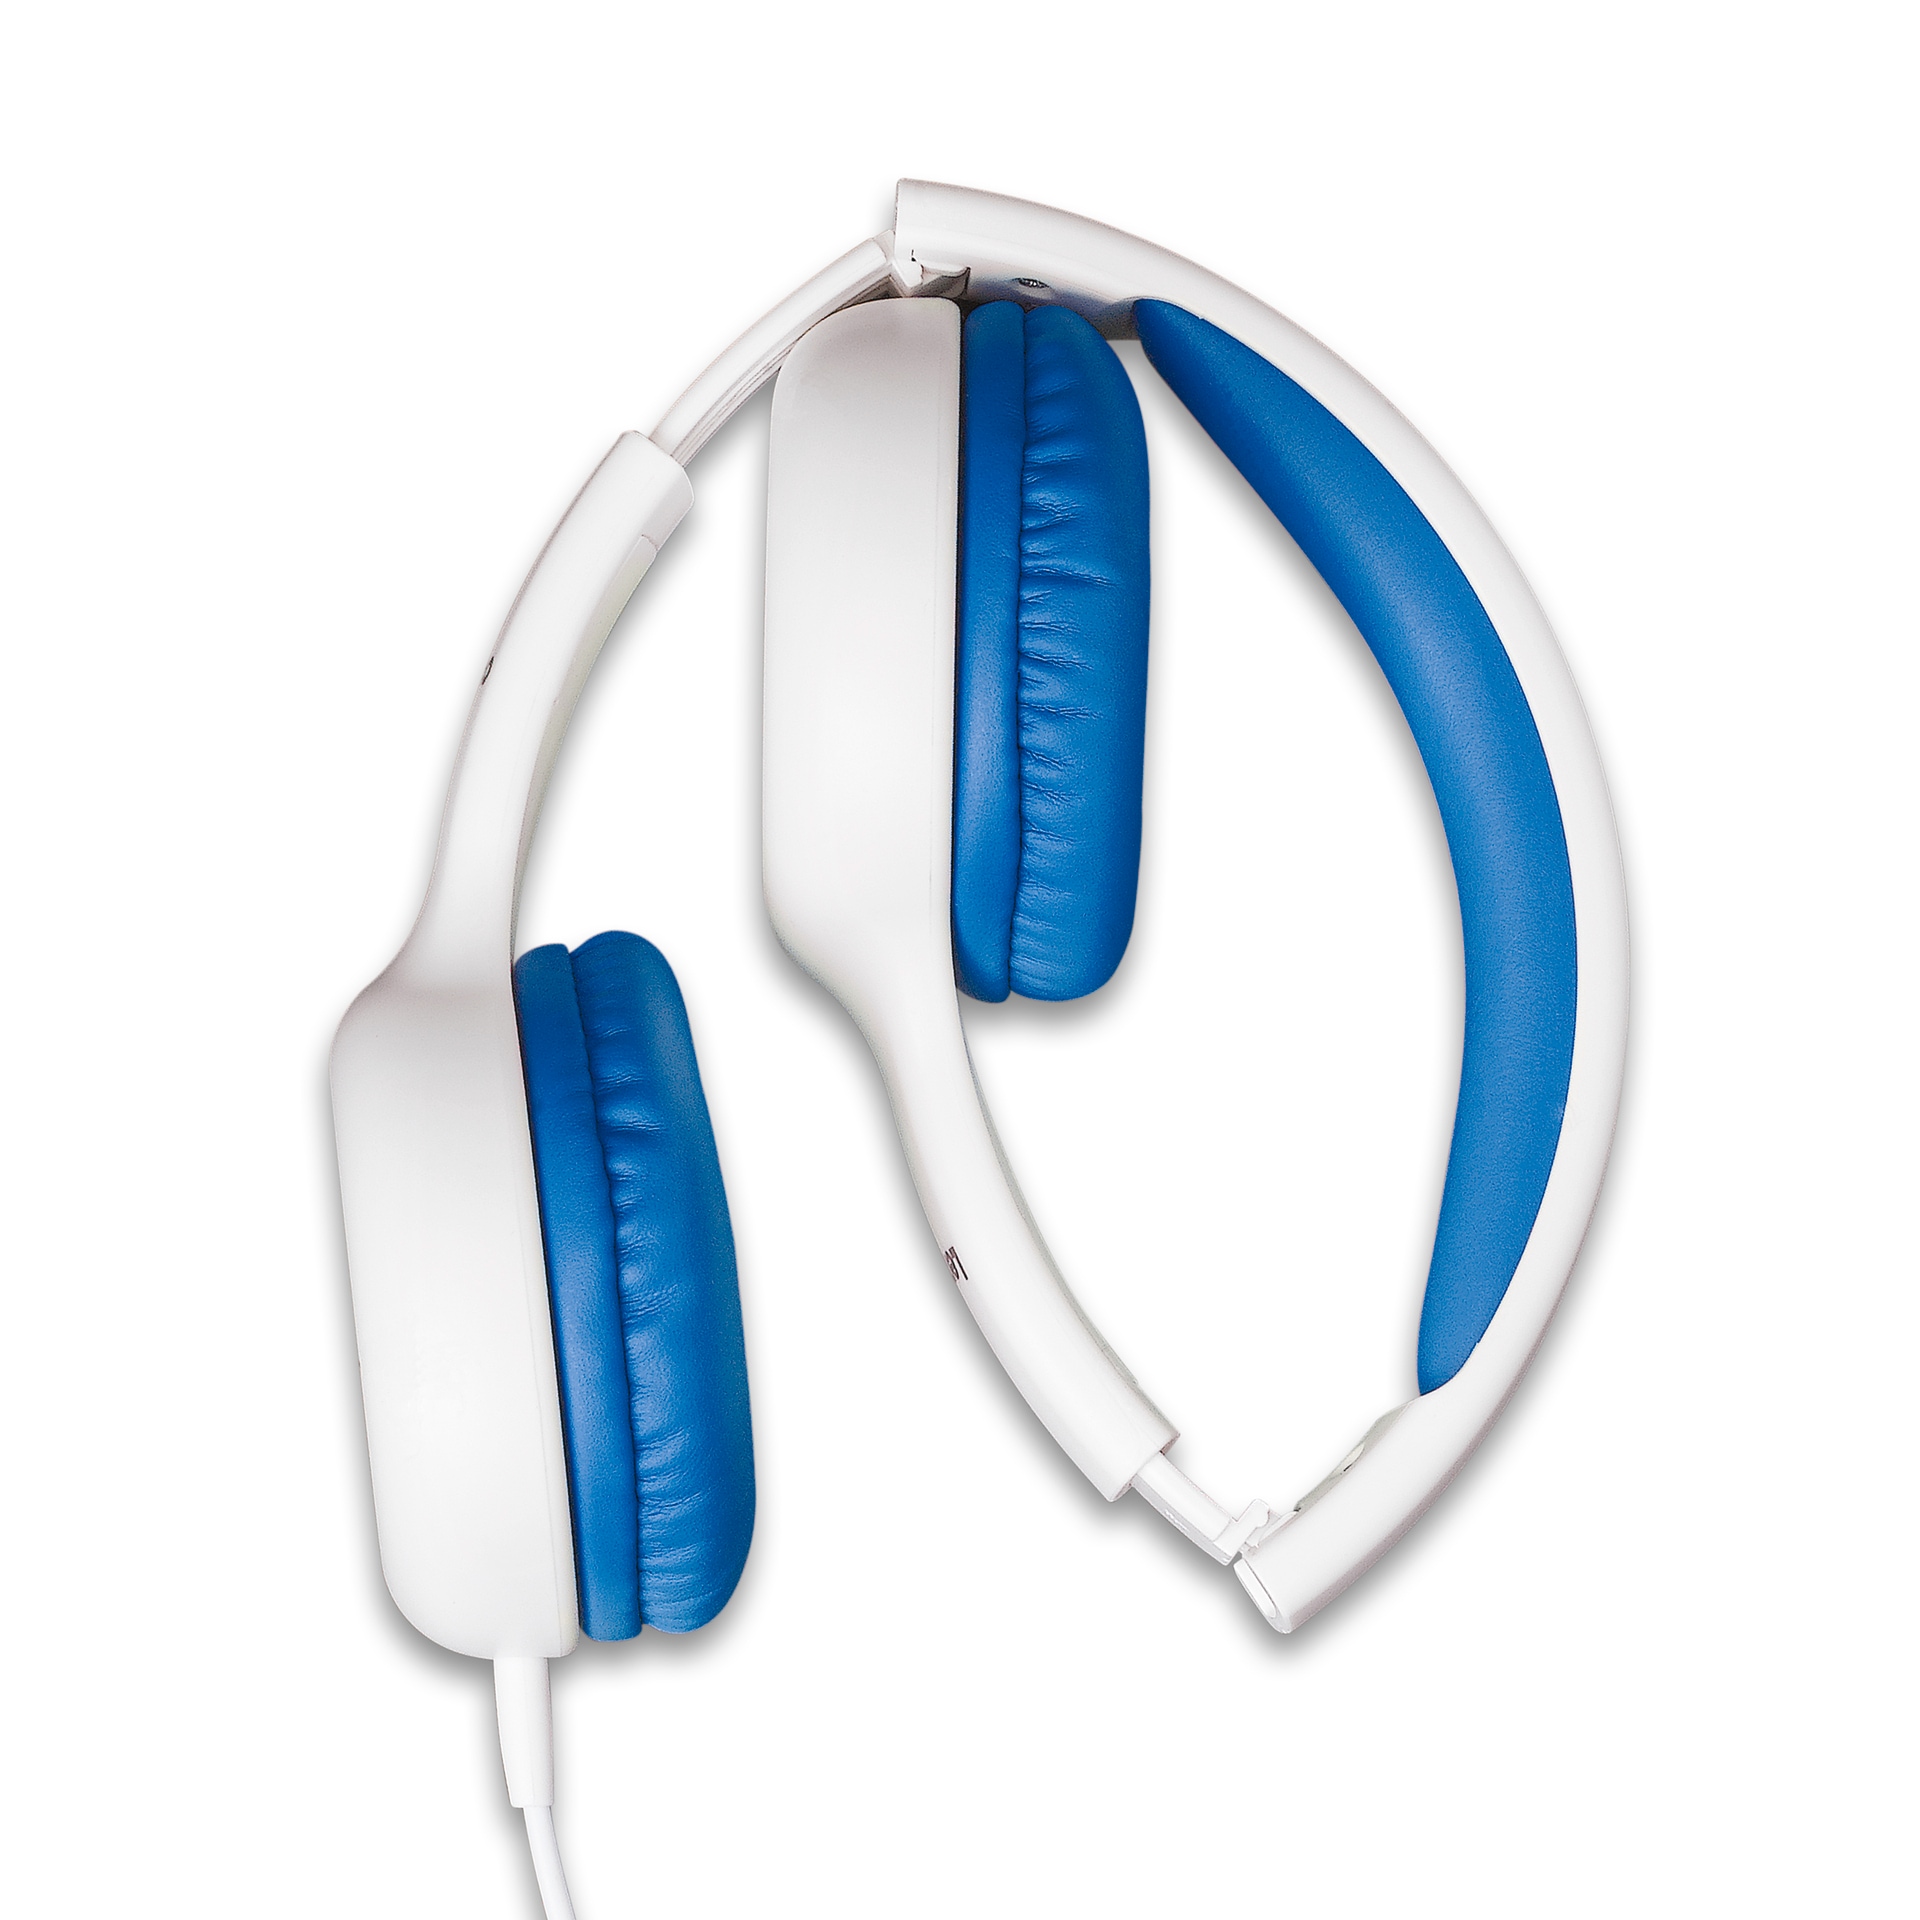 Lenco »HP-010 bequem Kinder-Kopfhörer Kinder« - Kopfhörer kaufen für